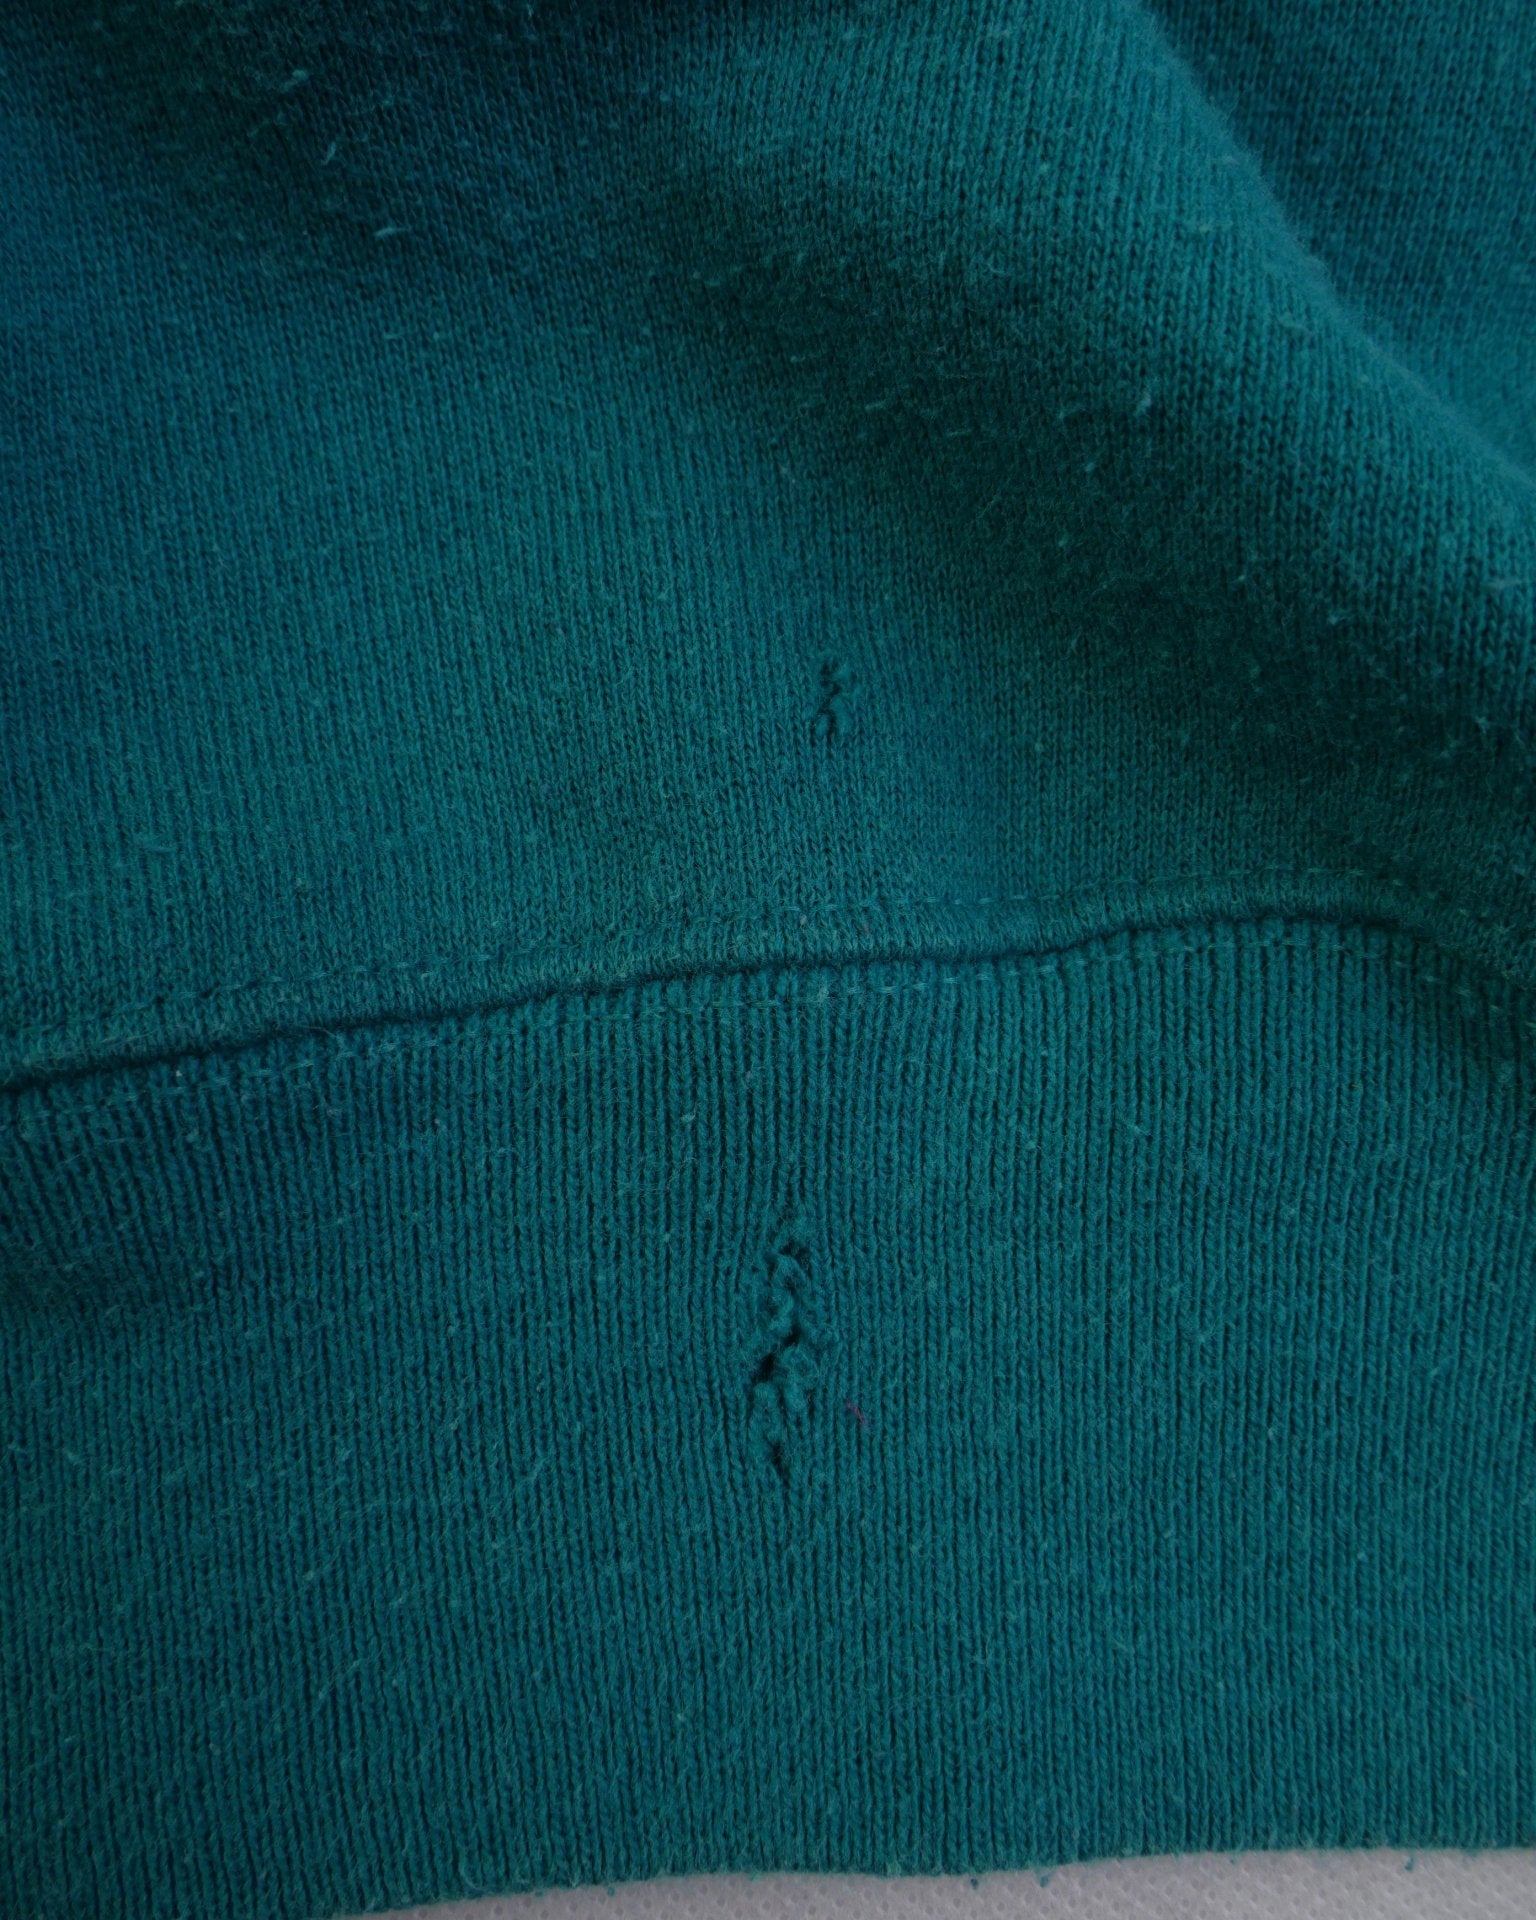 hanes printed Logo 'Vuarnet' turquoise Vintage Sweater - Peeces